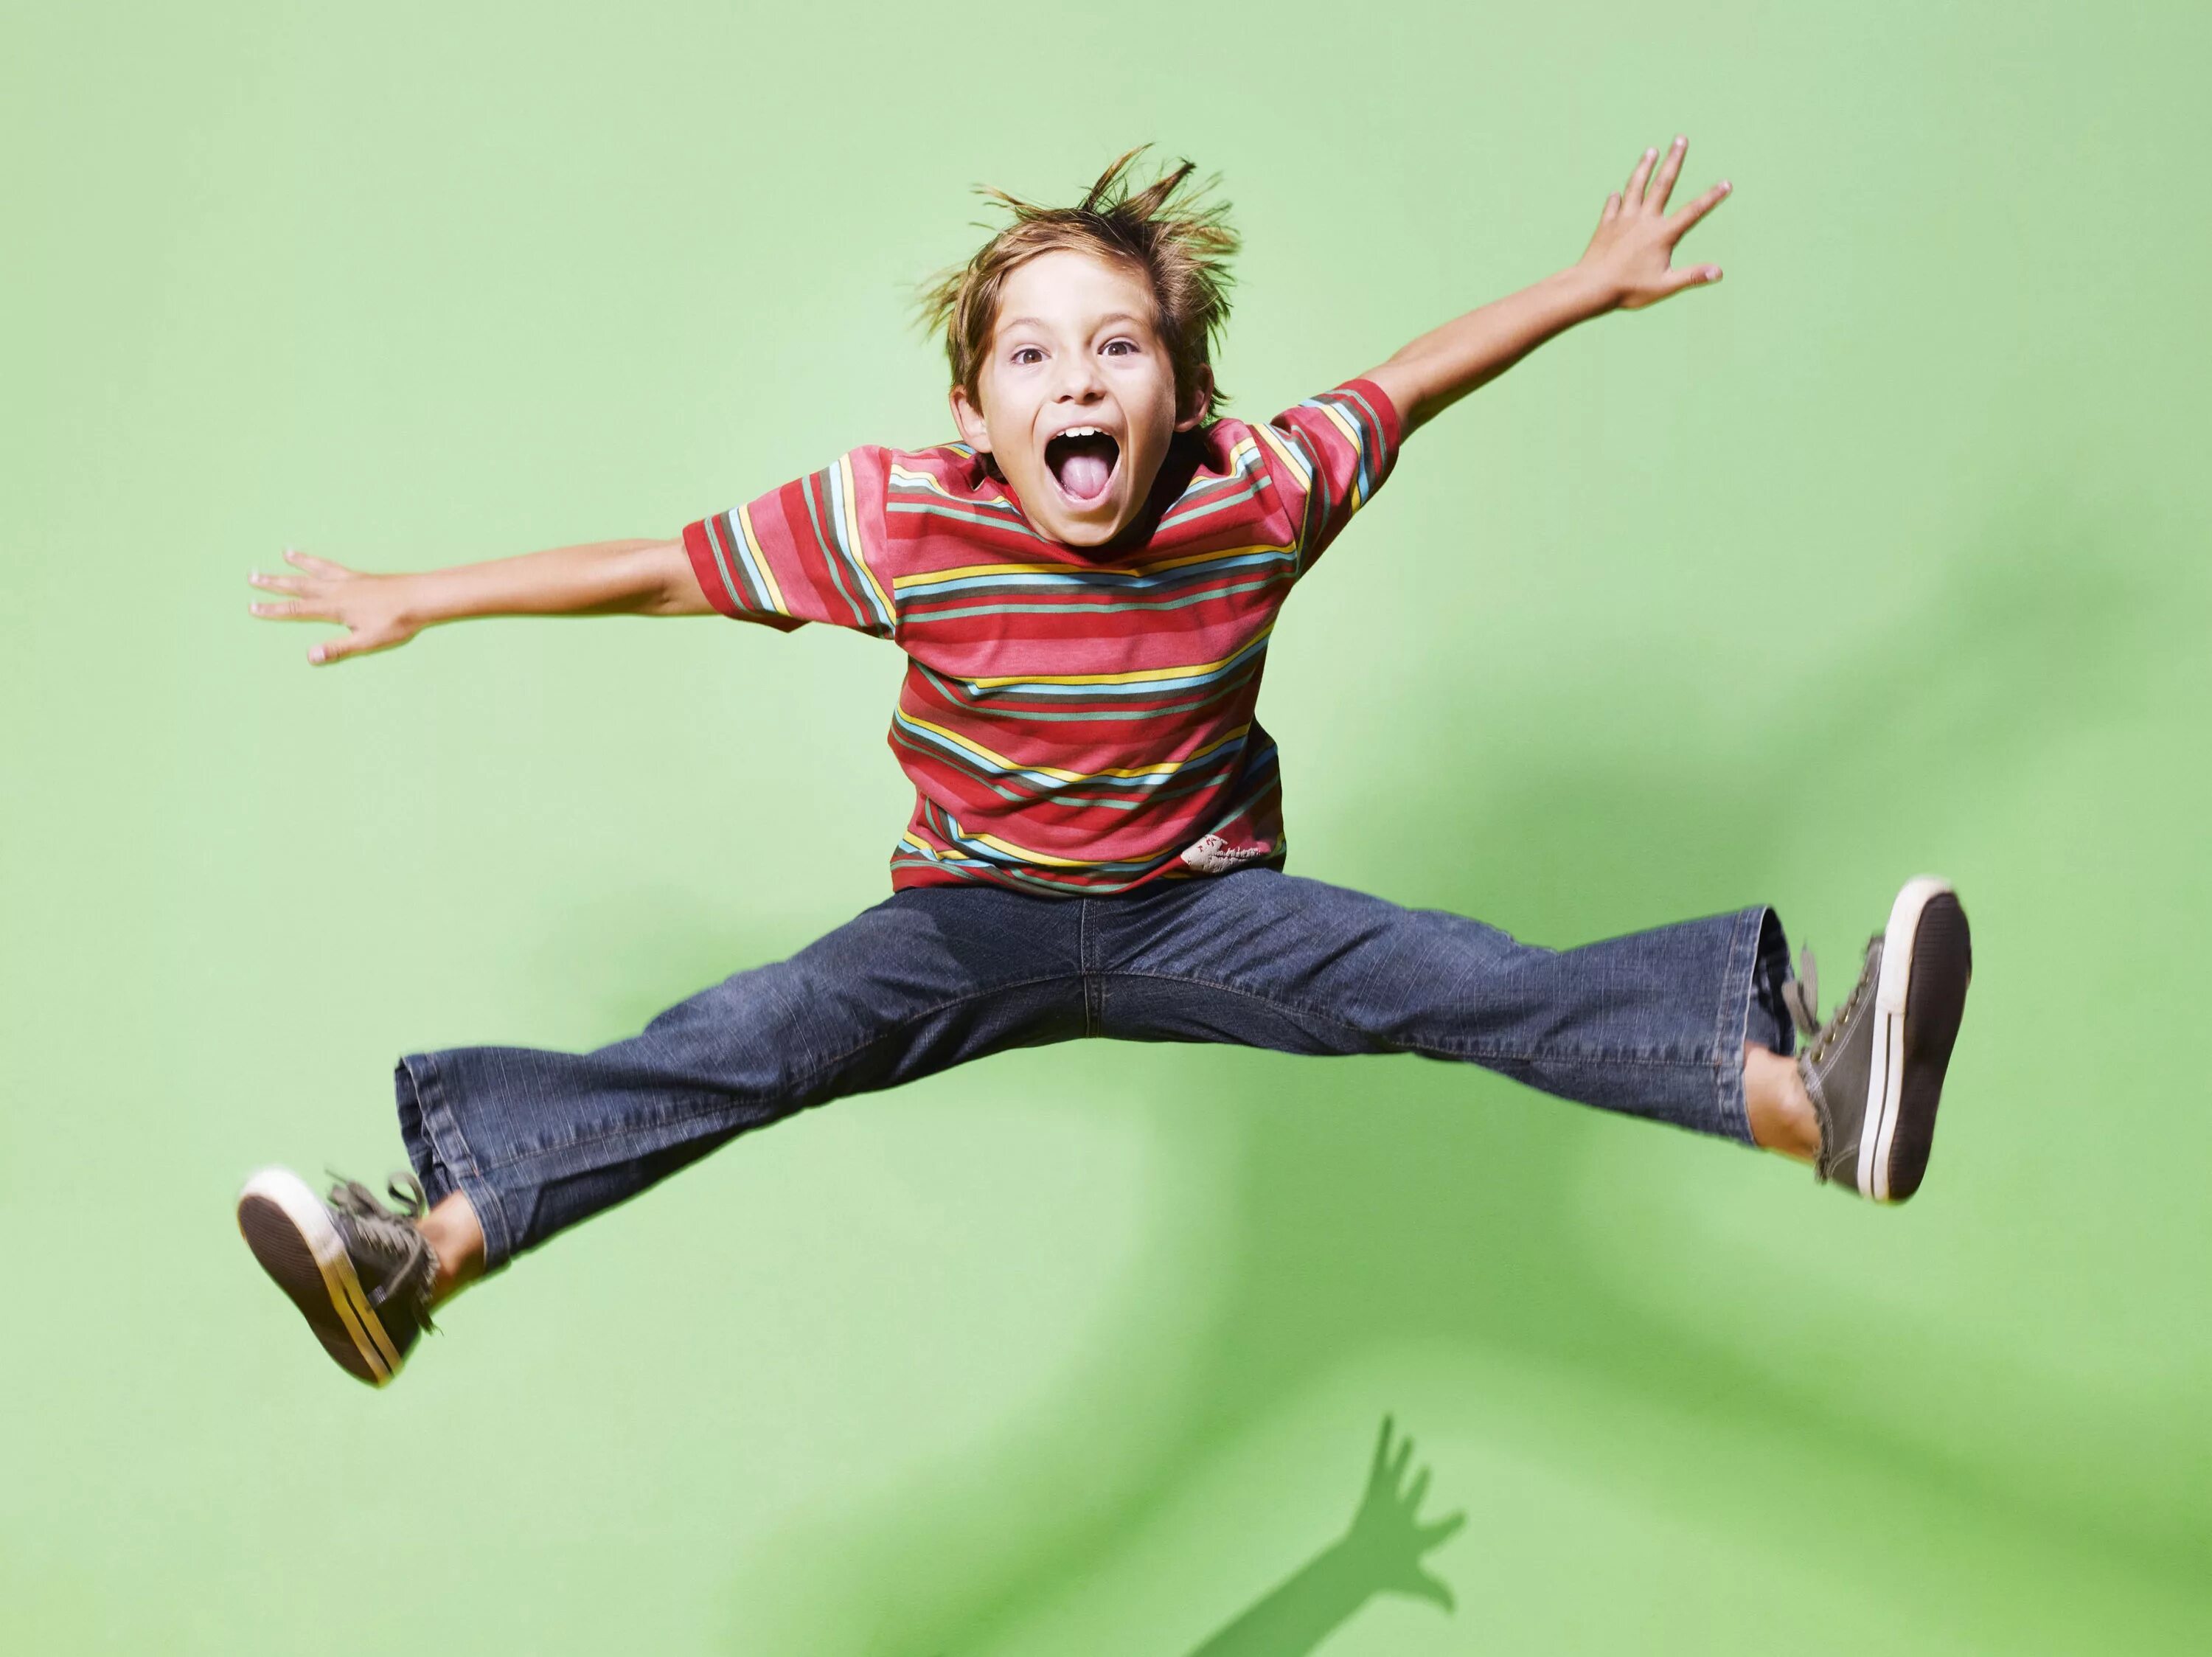 First jump. Гиперактивные дети. Гиперактивный ребенок. Активный ребенок. Дети прыгают.